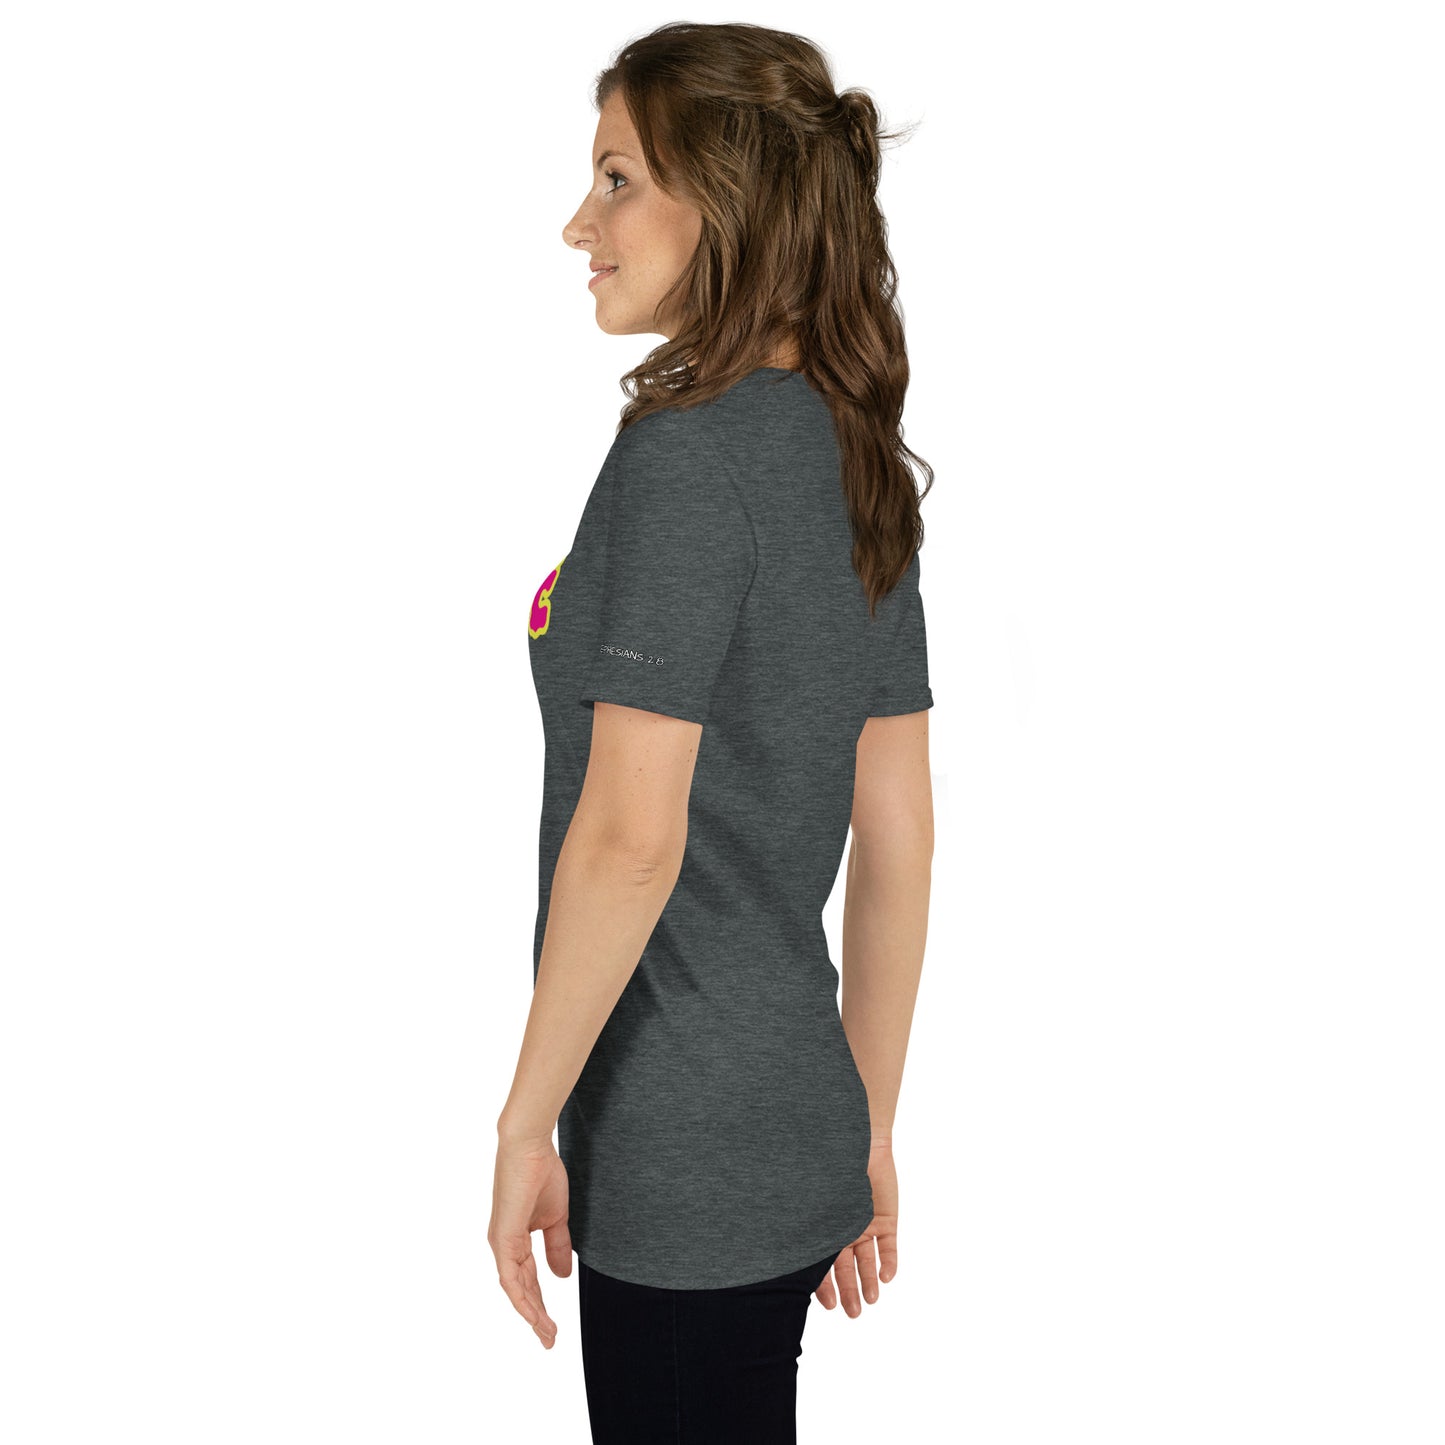 GRACE- Short-Sleeve Unisex T-Shirt